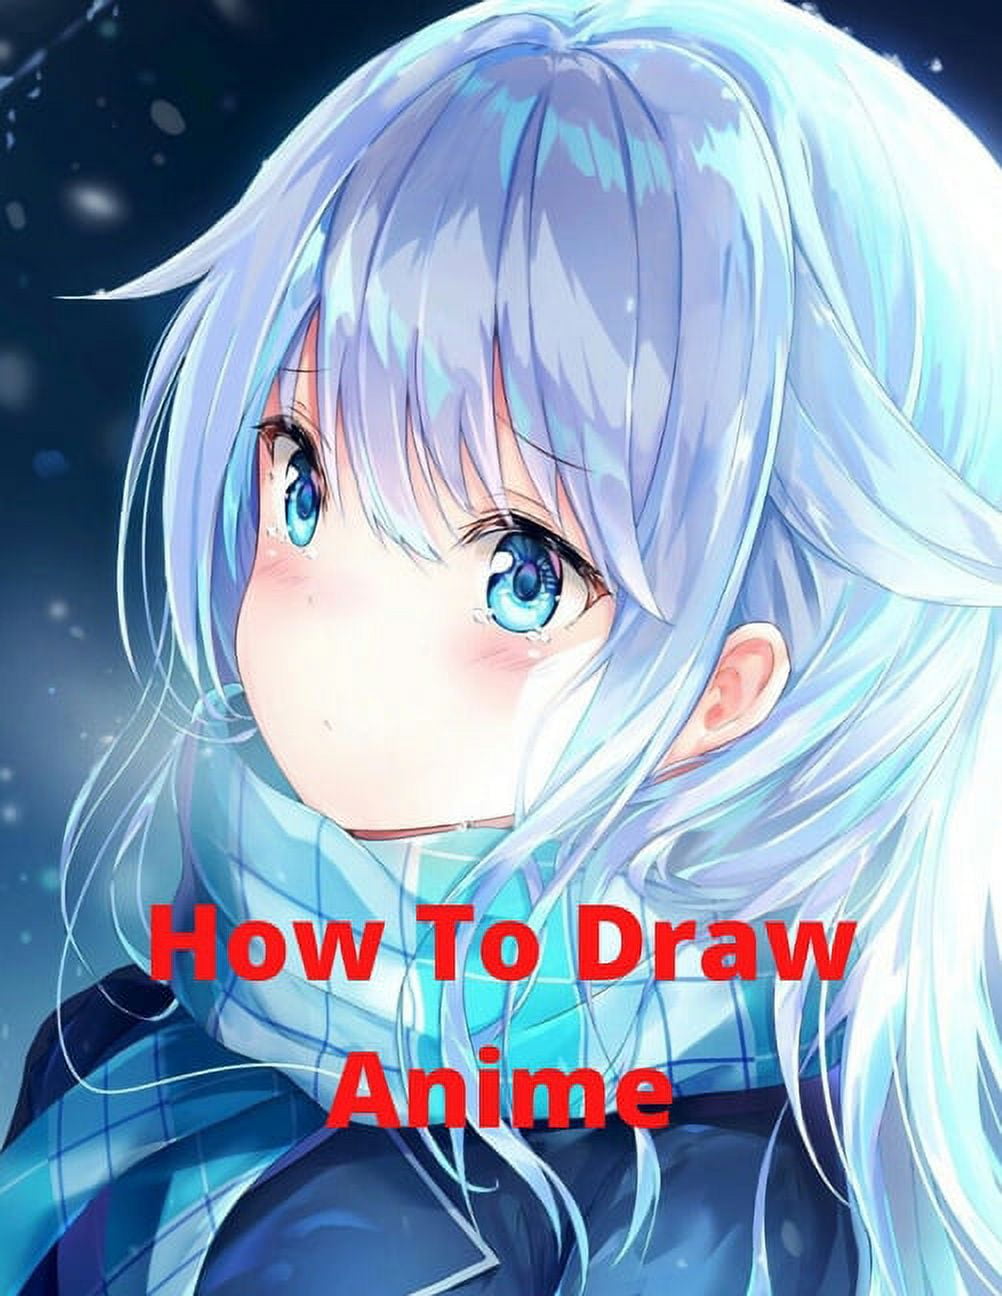 Manga Eye Drawing Reference Guide